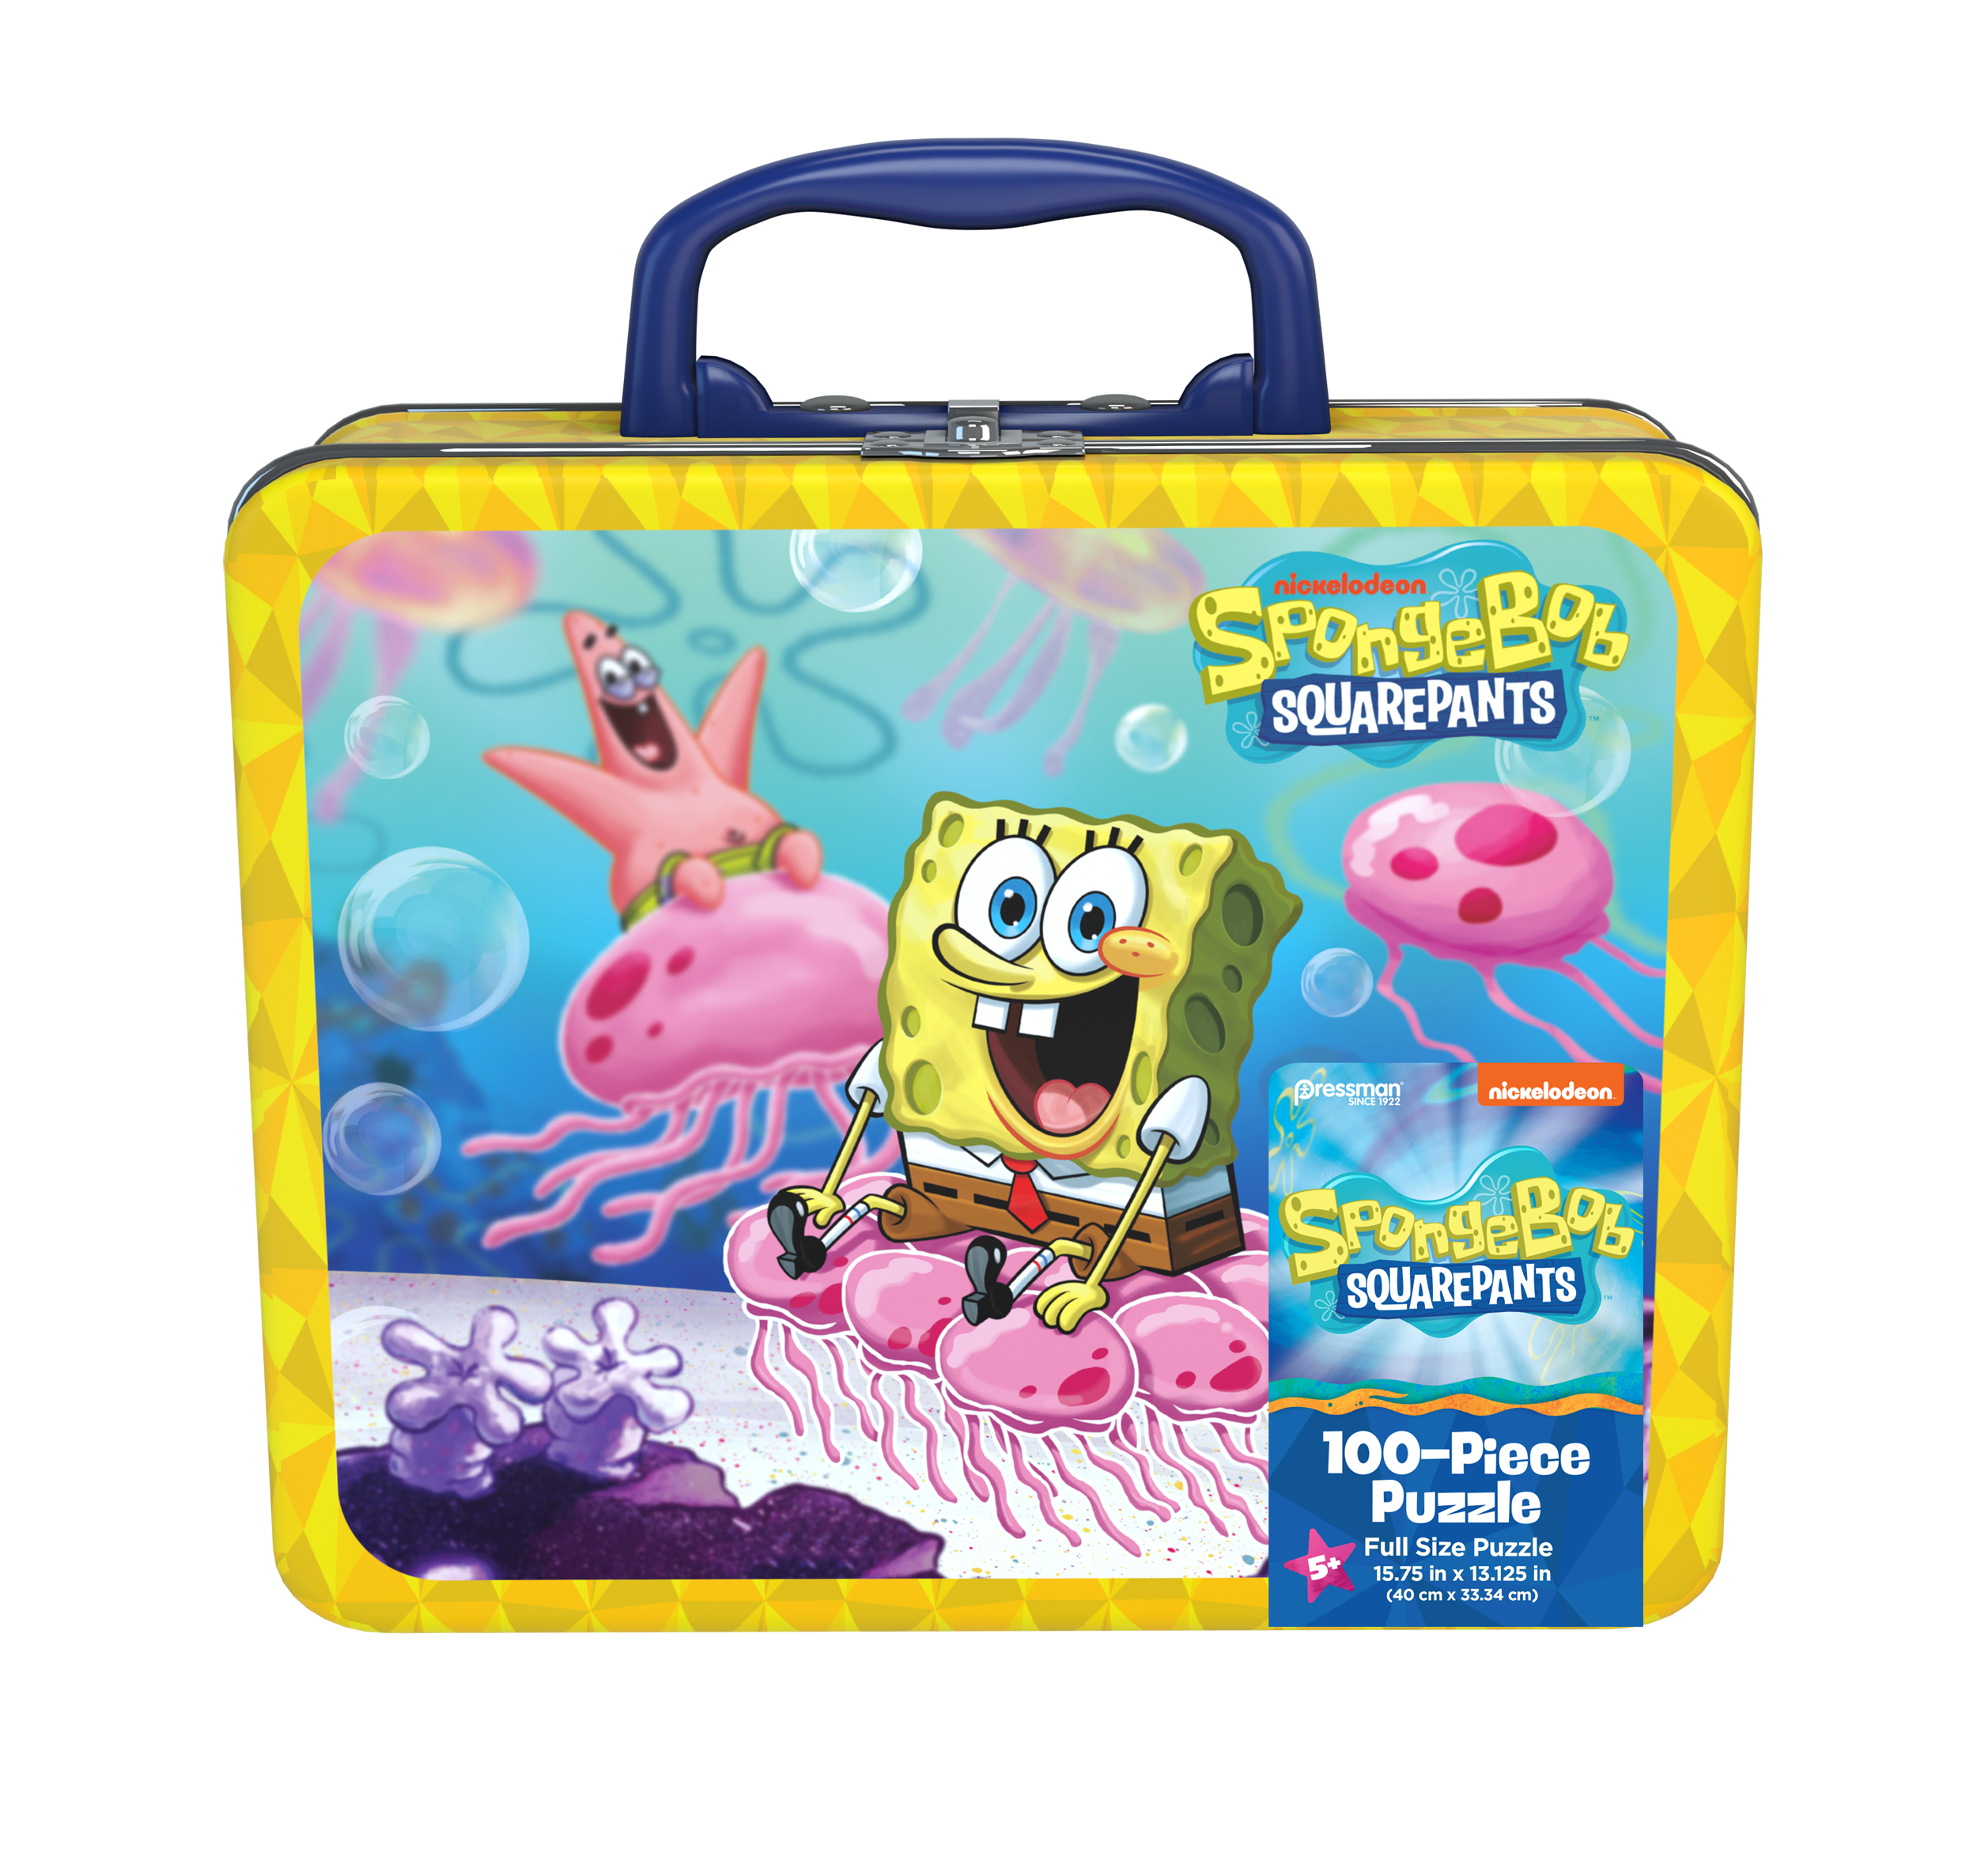 New Nickelodeon Spongebob Squarepants Britto 300pc Puzzle 24”x18” 